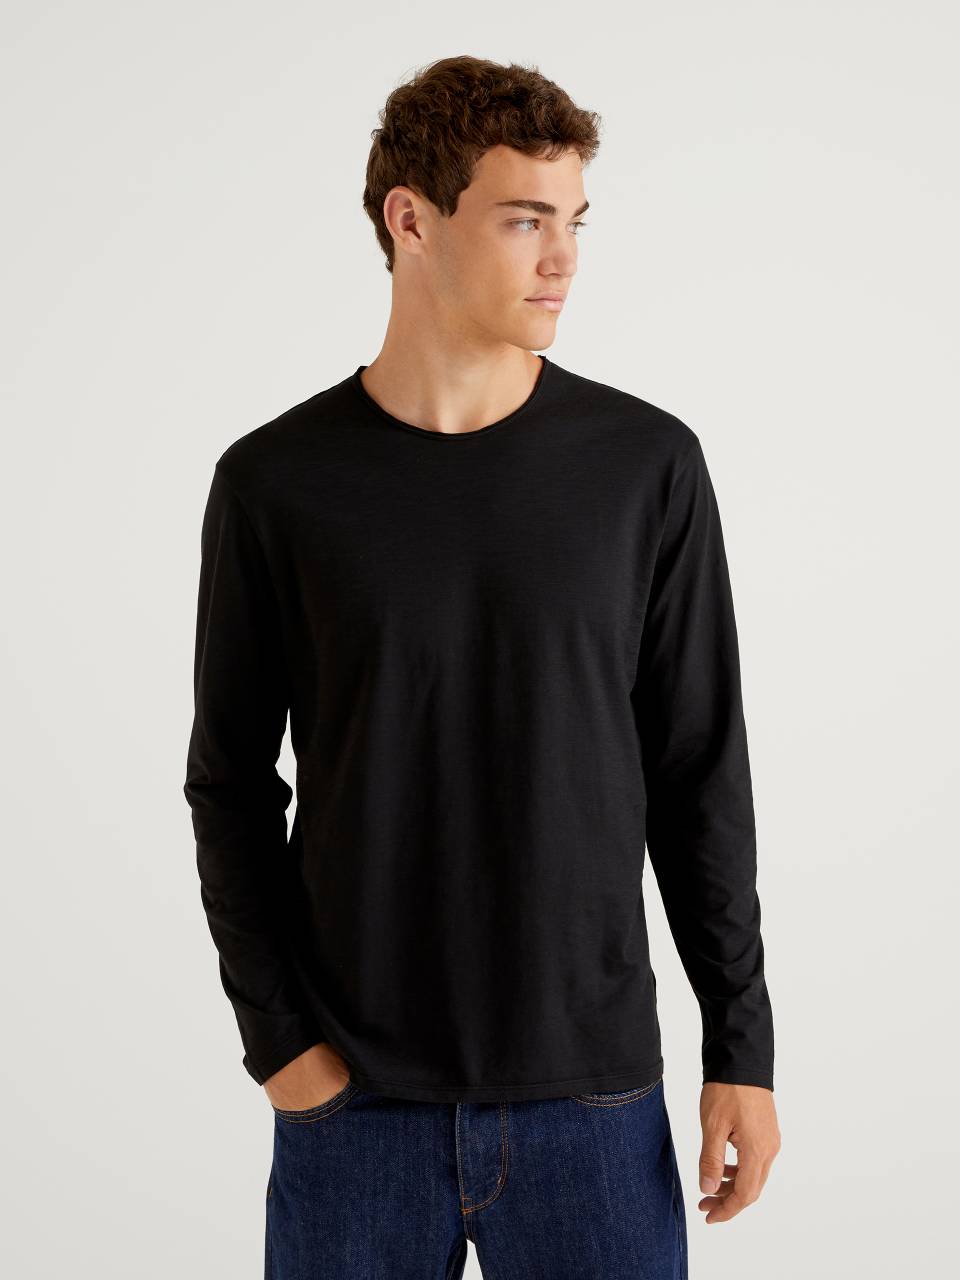 Benetton Long sleeve t-shirt in 100% cotton. 1